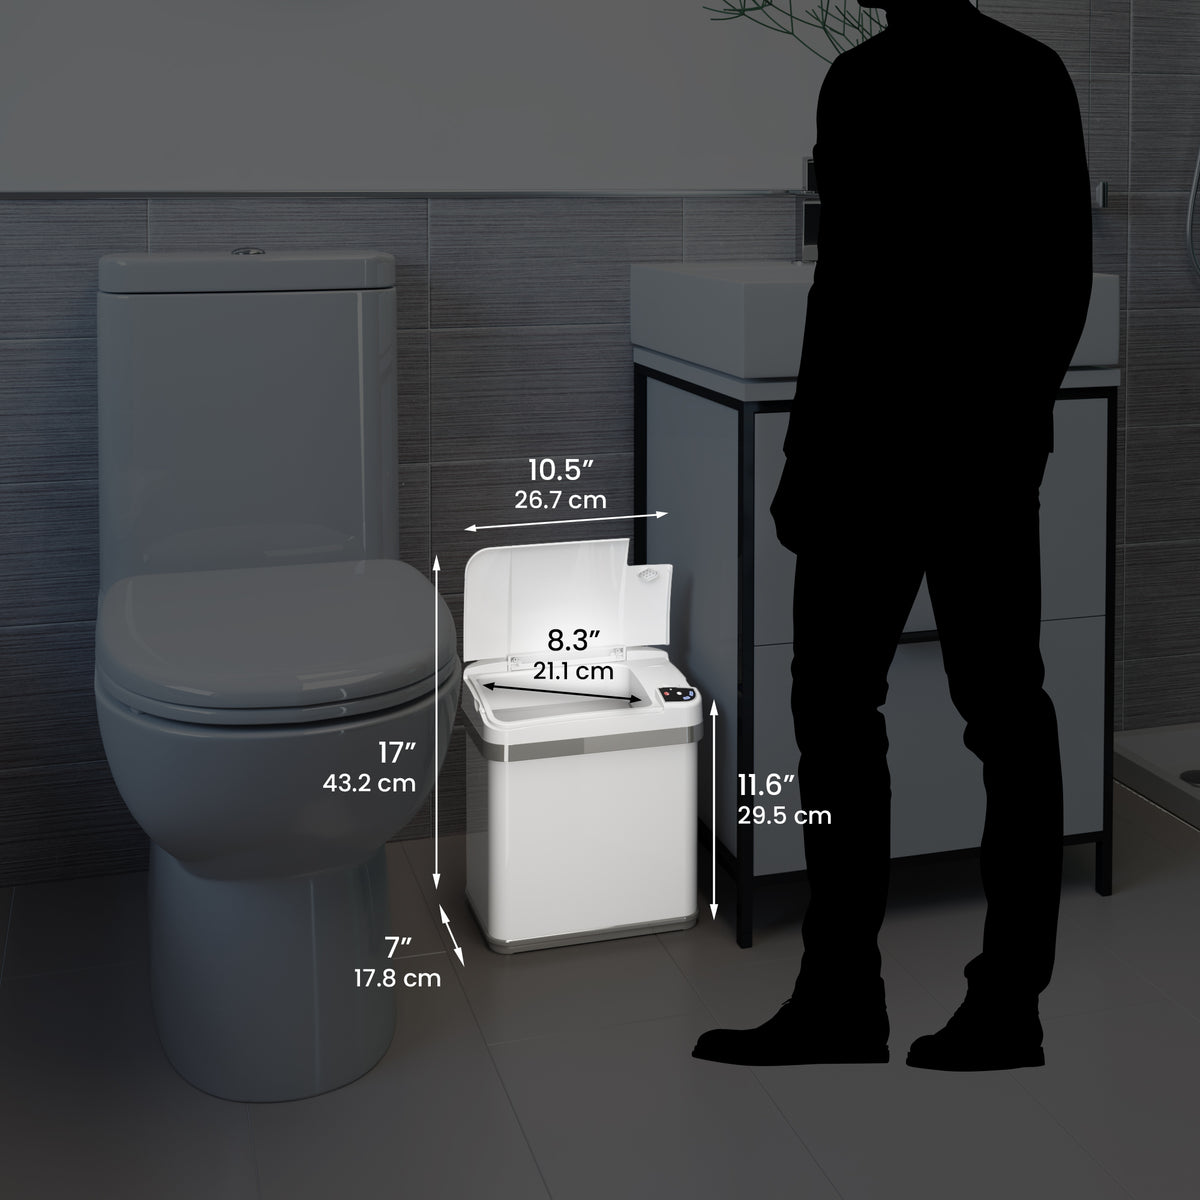 2.5 Gallon / 9.5 Liter White Sensor Bathroom Trash Can dimensions